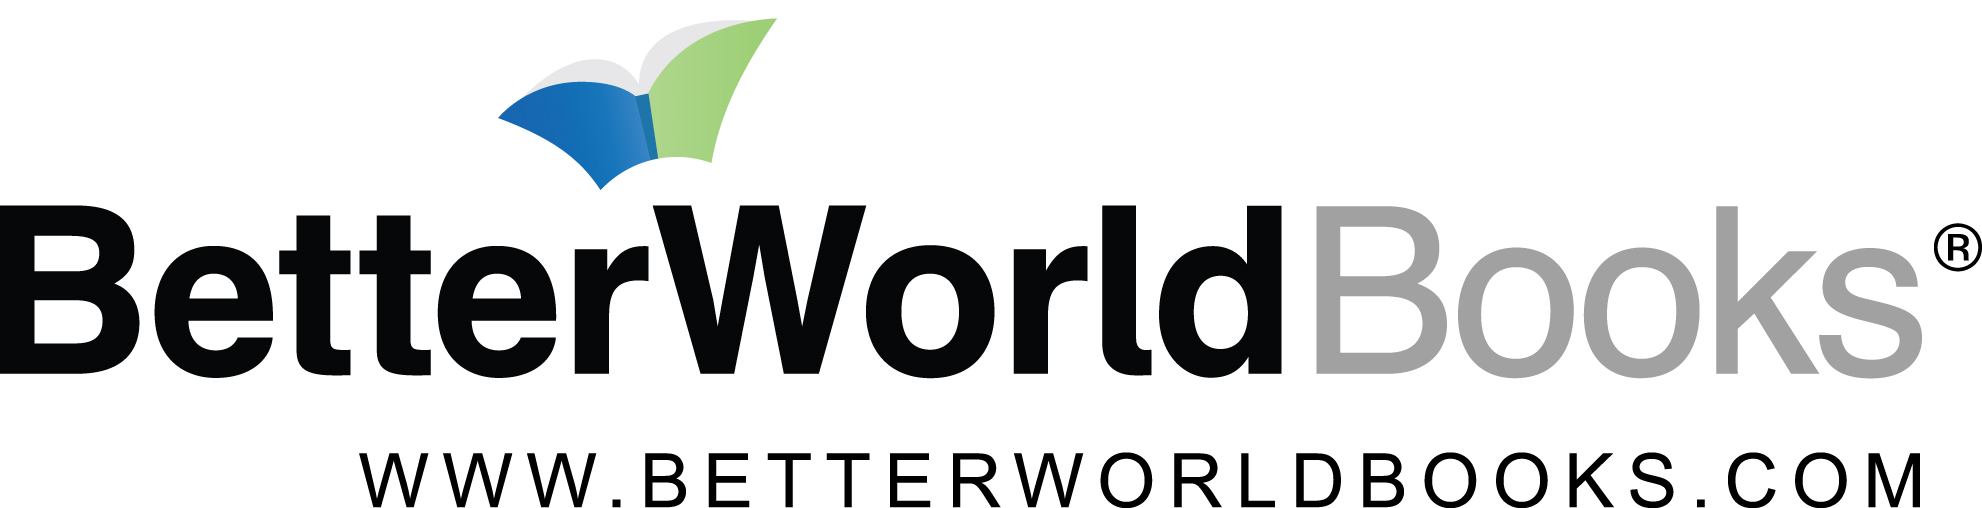 Best world books. Book World логотип. Better World. Crystal book логотип. BETTERWORLDBOOKS доставка в Россию.